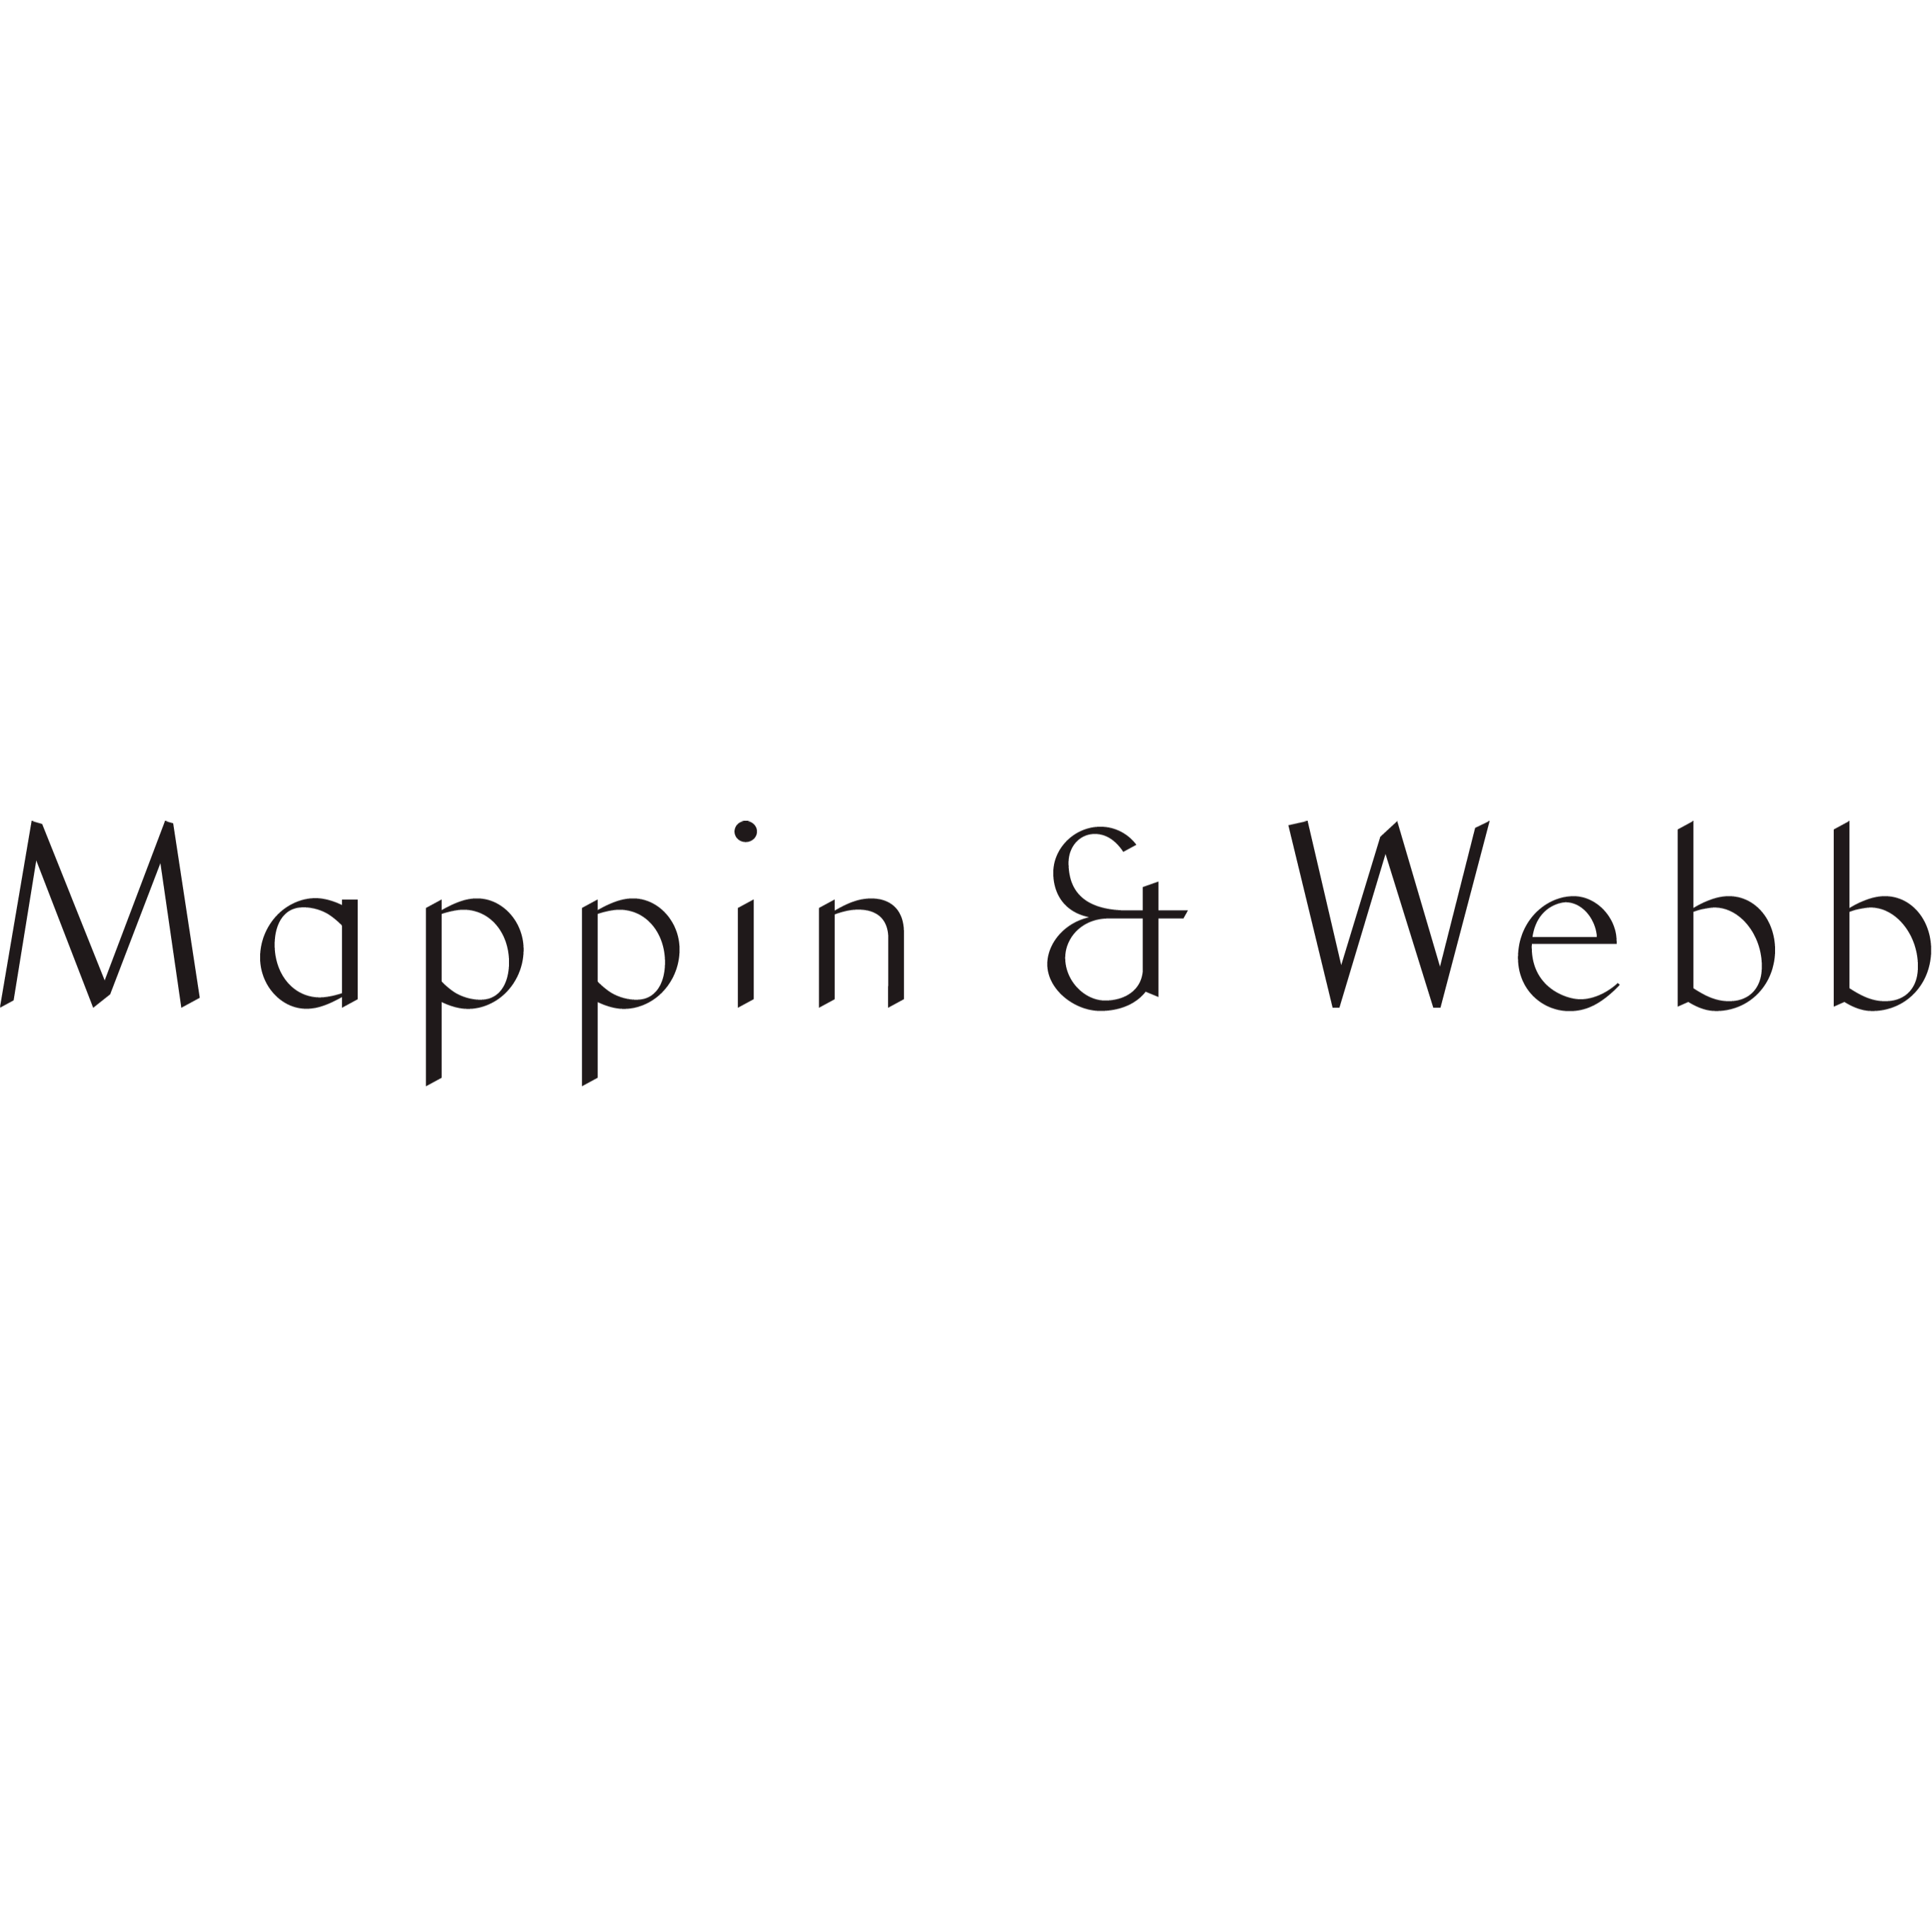 Mappin & Webb - Cambridge, Cambridgeshire CB2 3NR - 01223 353889 | ShowMeLocal.com